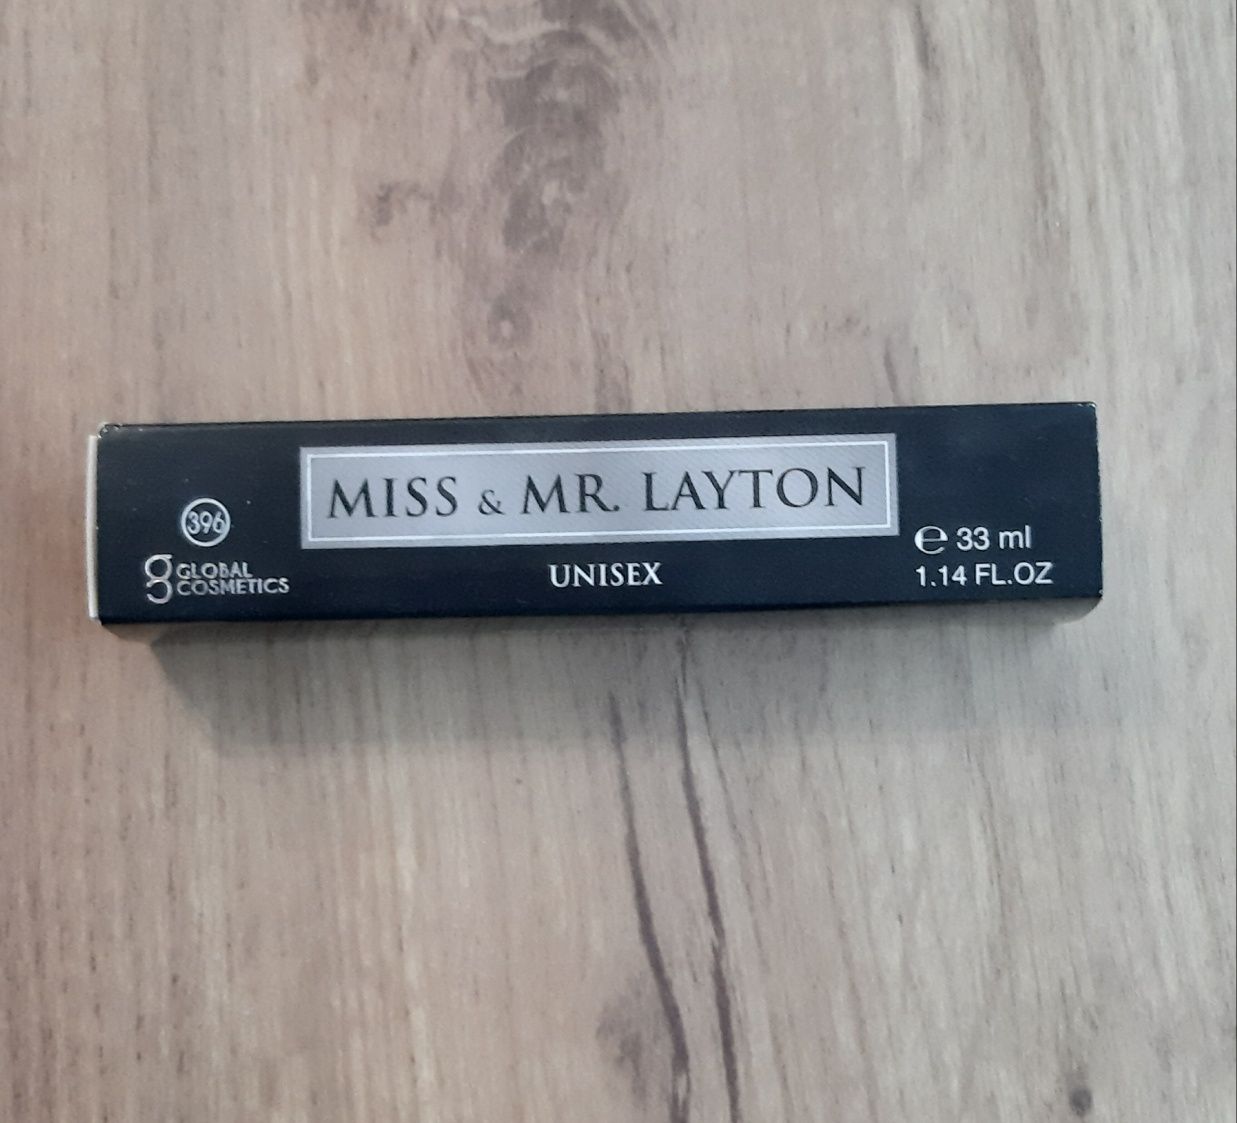 Unisex Perfumy Miss & Mr Layton (Global Cosmetics)